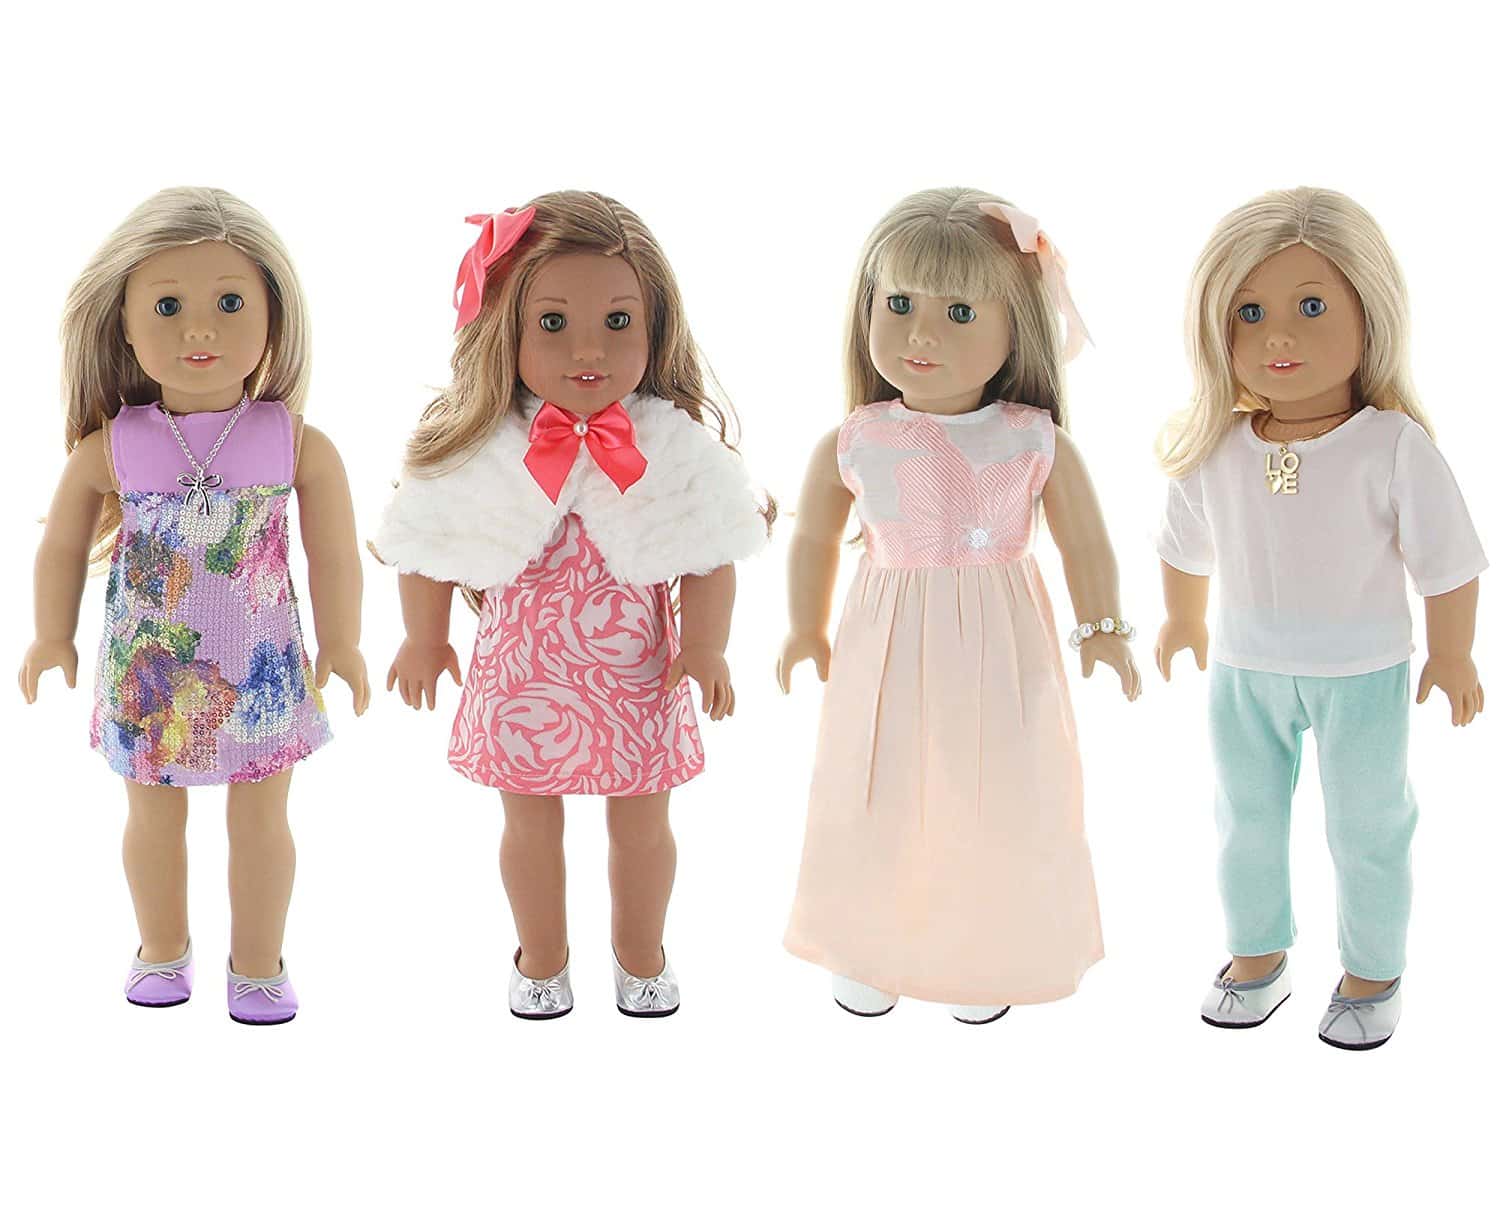 LIGHTNING DEAL ALERT! 4 Sets of Doll Clothes fits American Girl Dolls – 62% off!